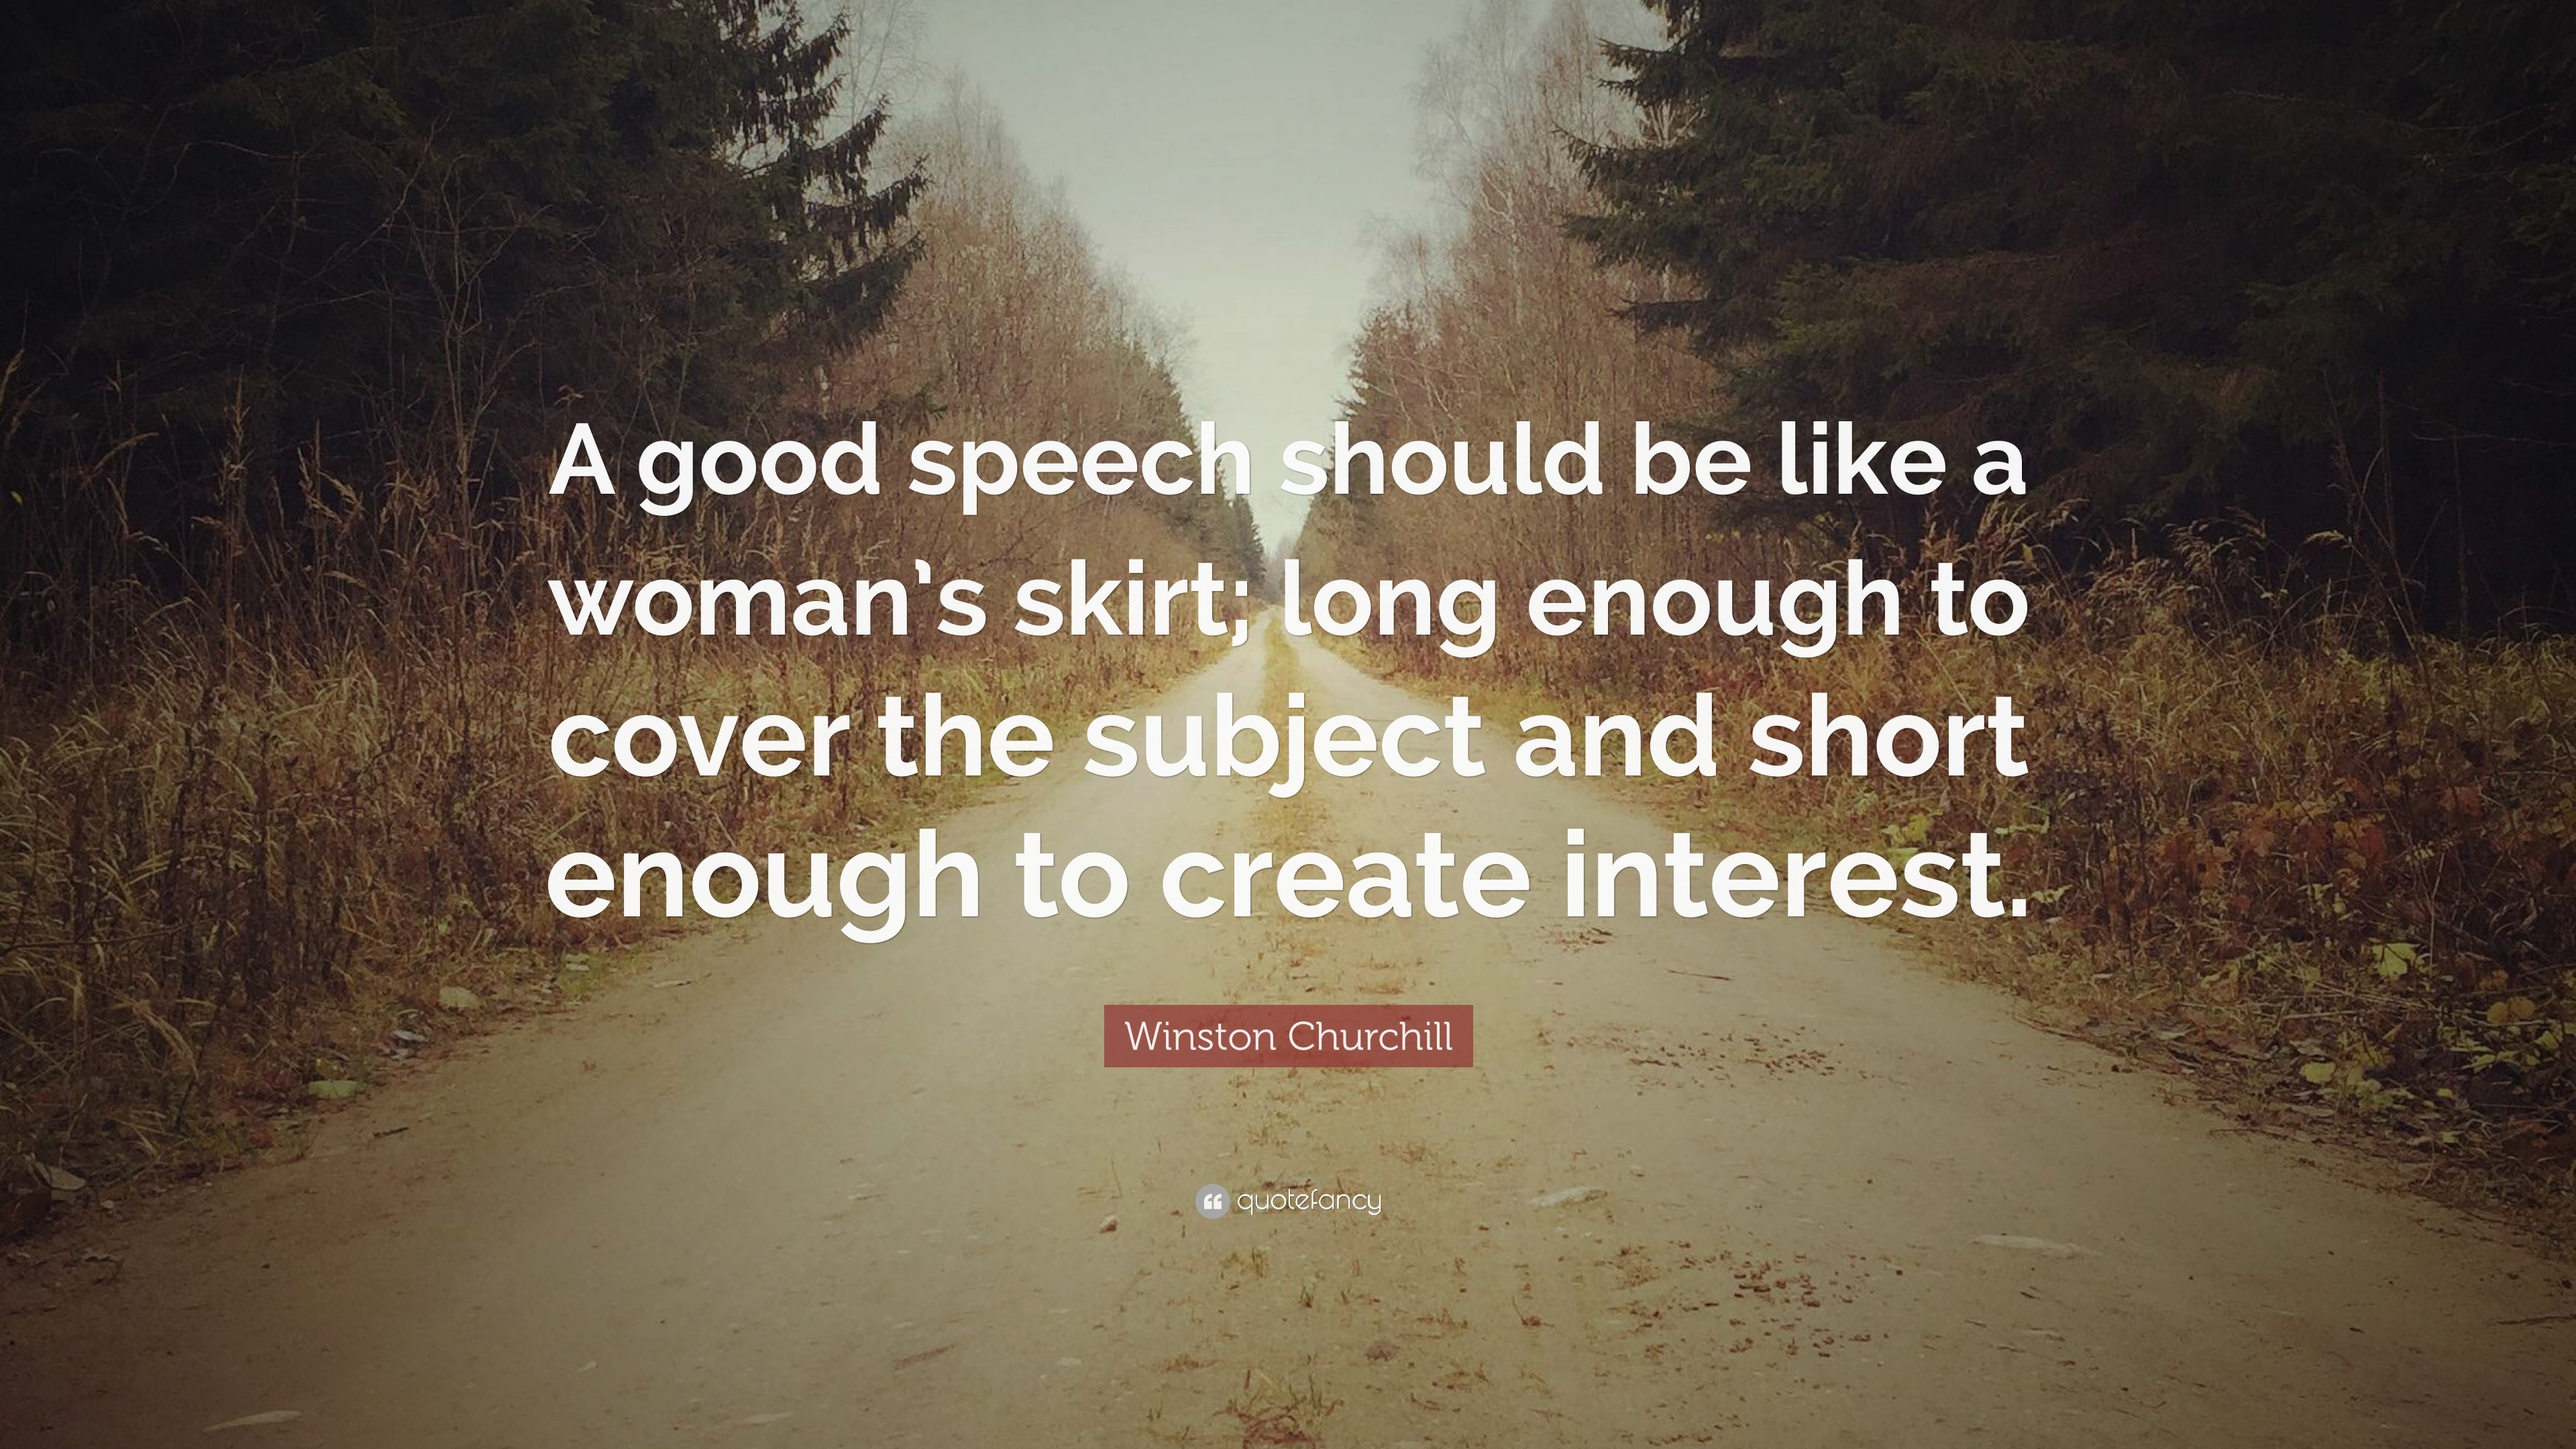 a good speech should be like a woman's skirt explained